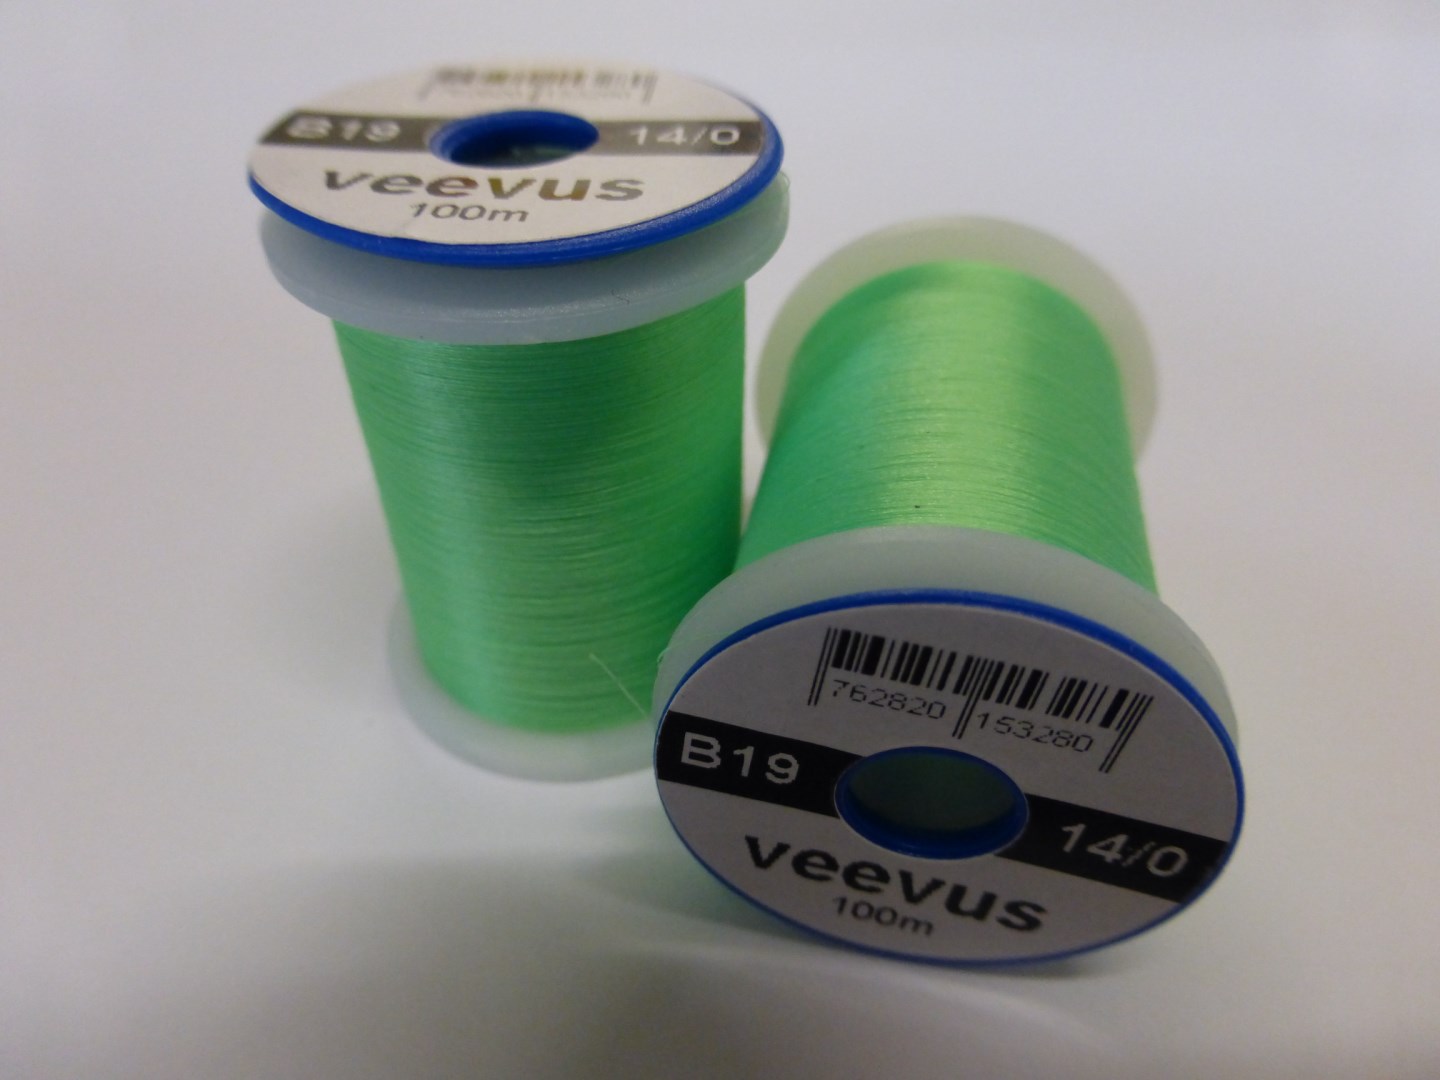 Veevus 14/0 Fluo Green B19